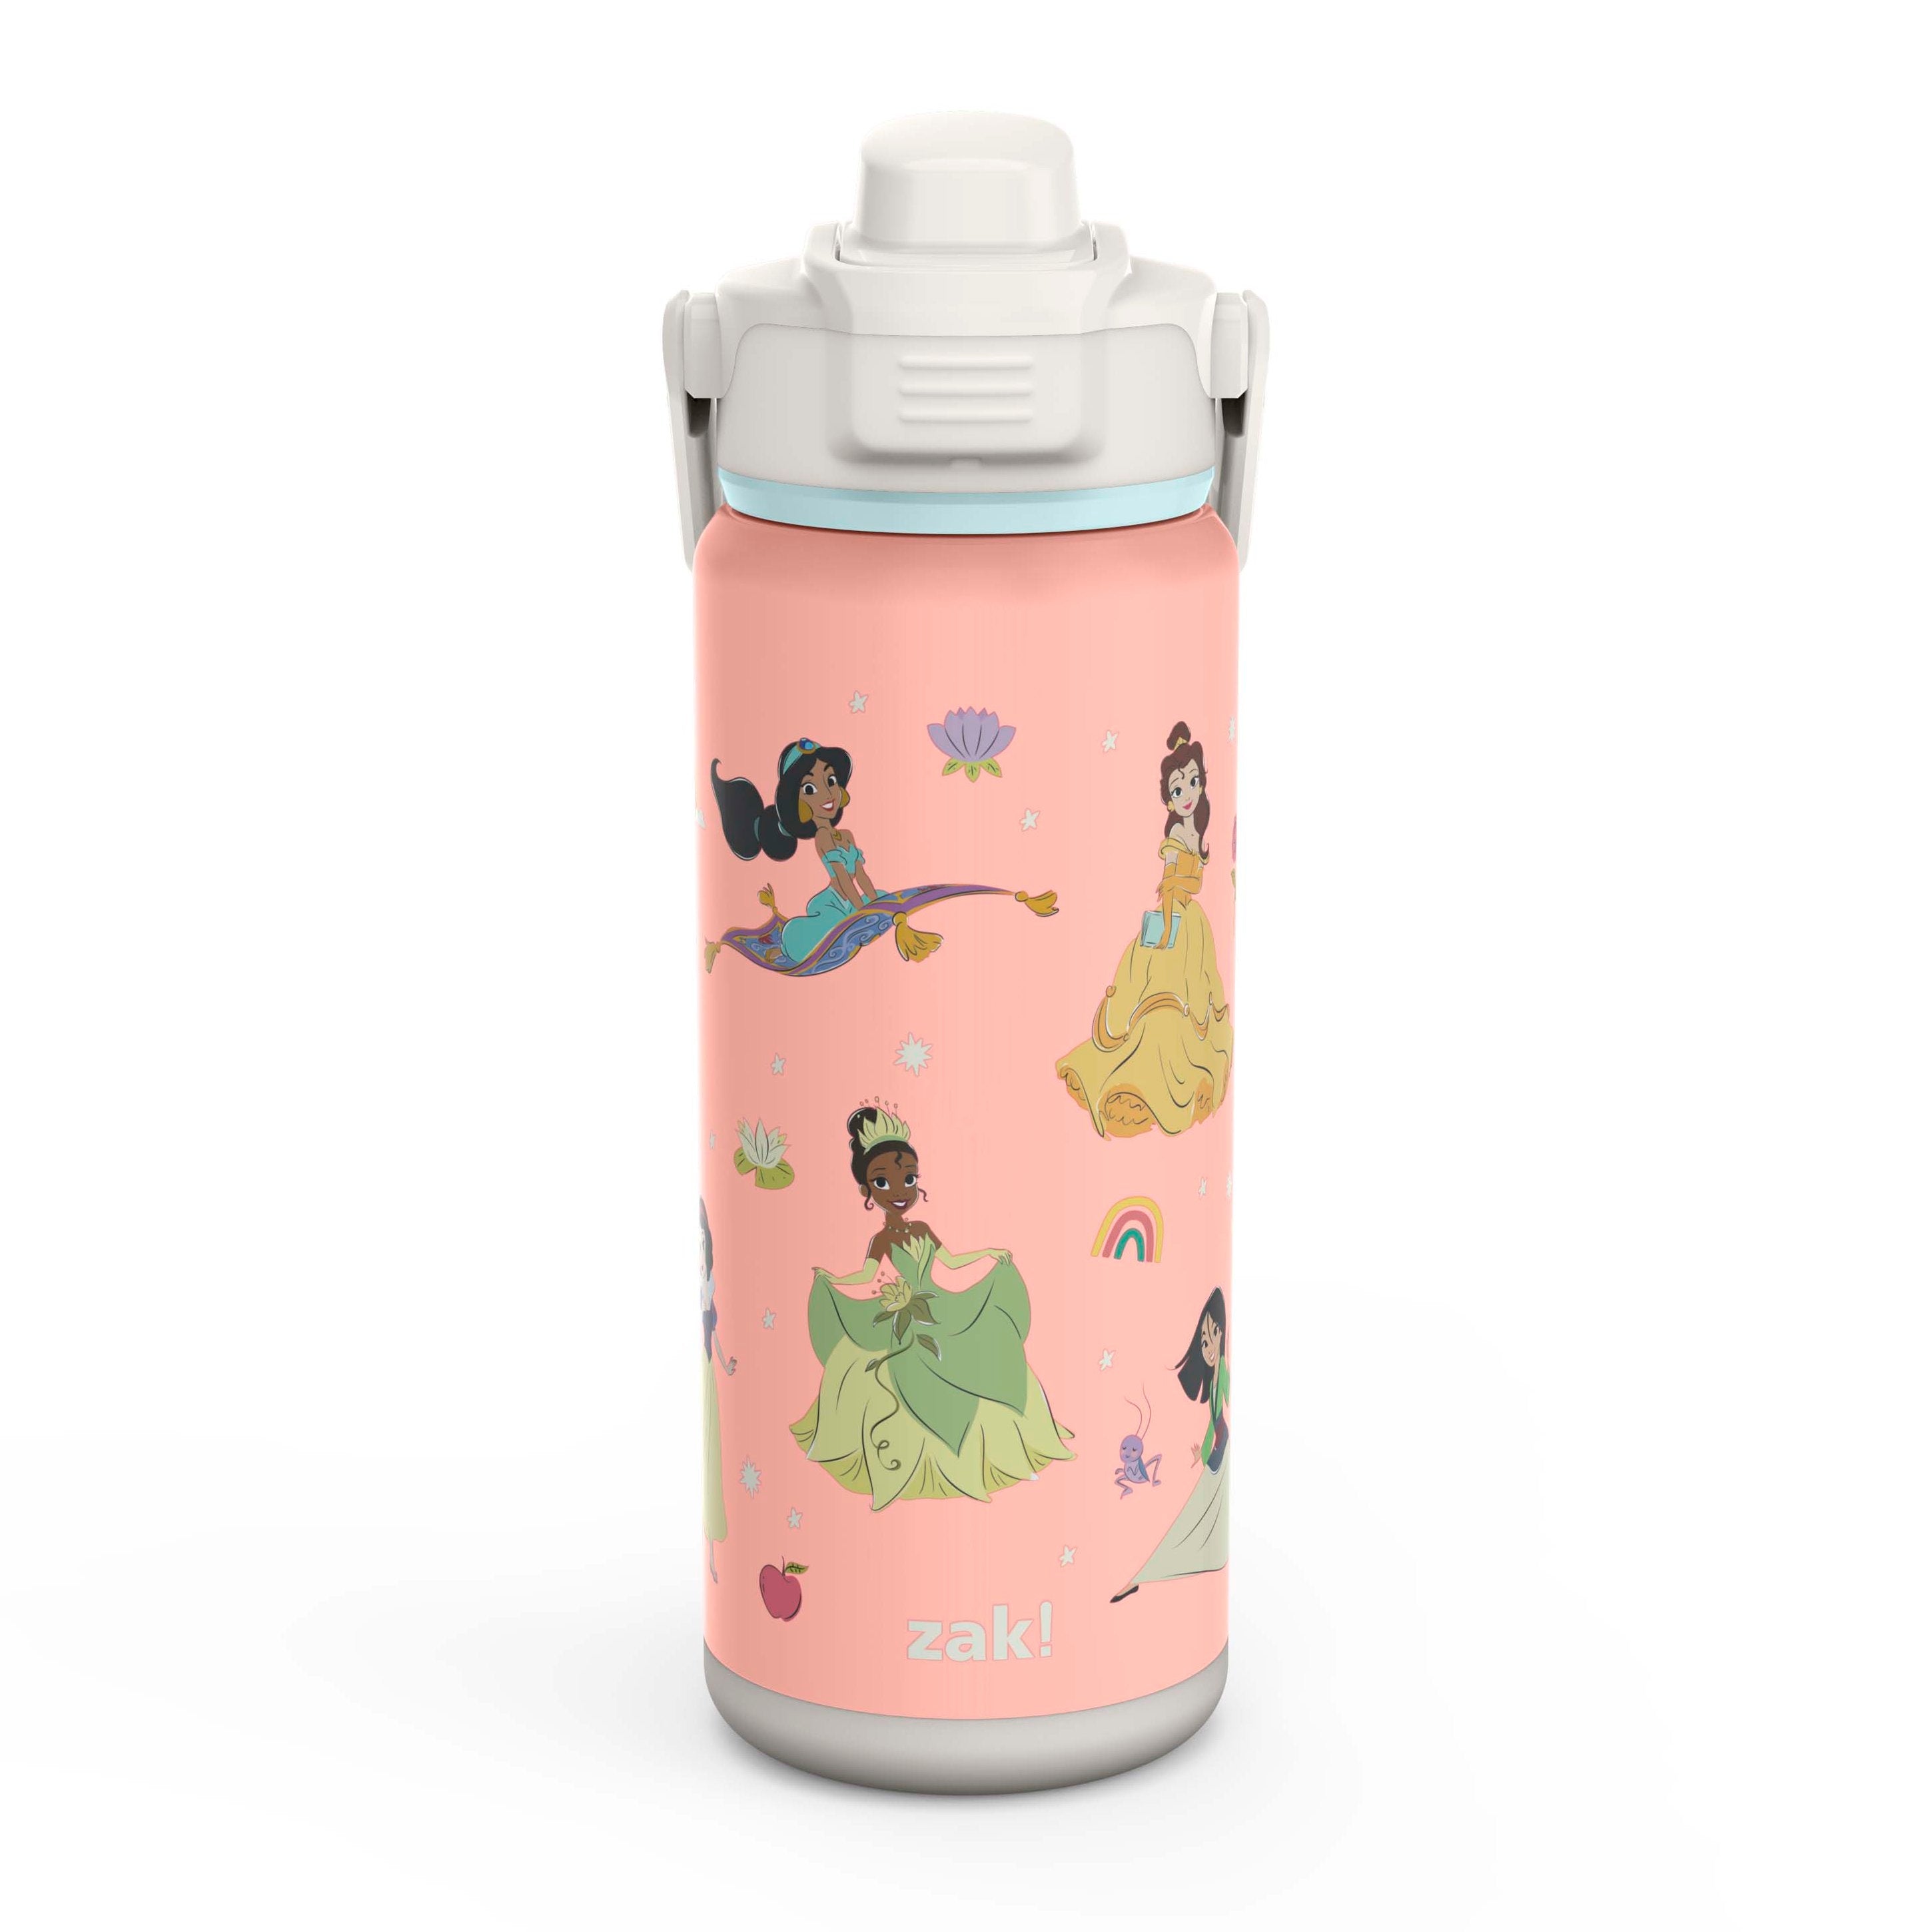 Zak! Designs Kids Atlantic Bottle - Galaxy - Shop Cups & Tumblers at H-E-B